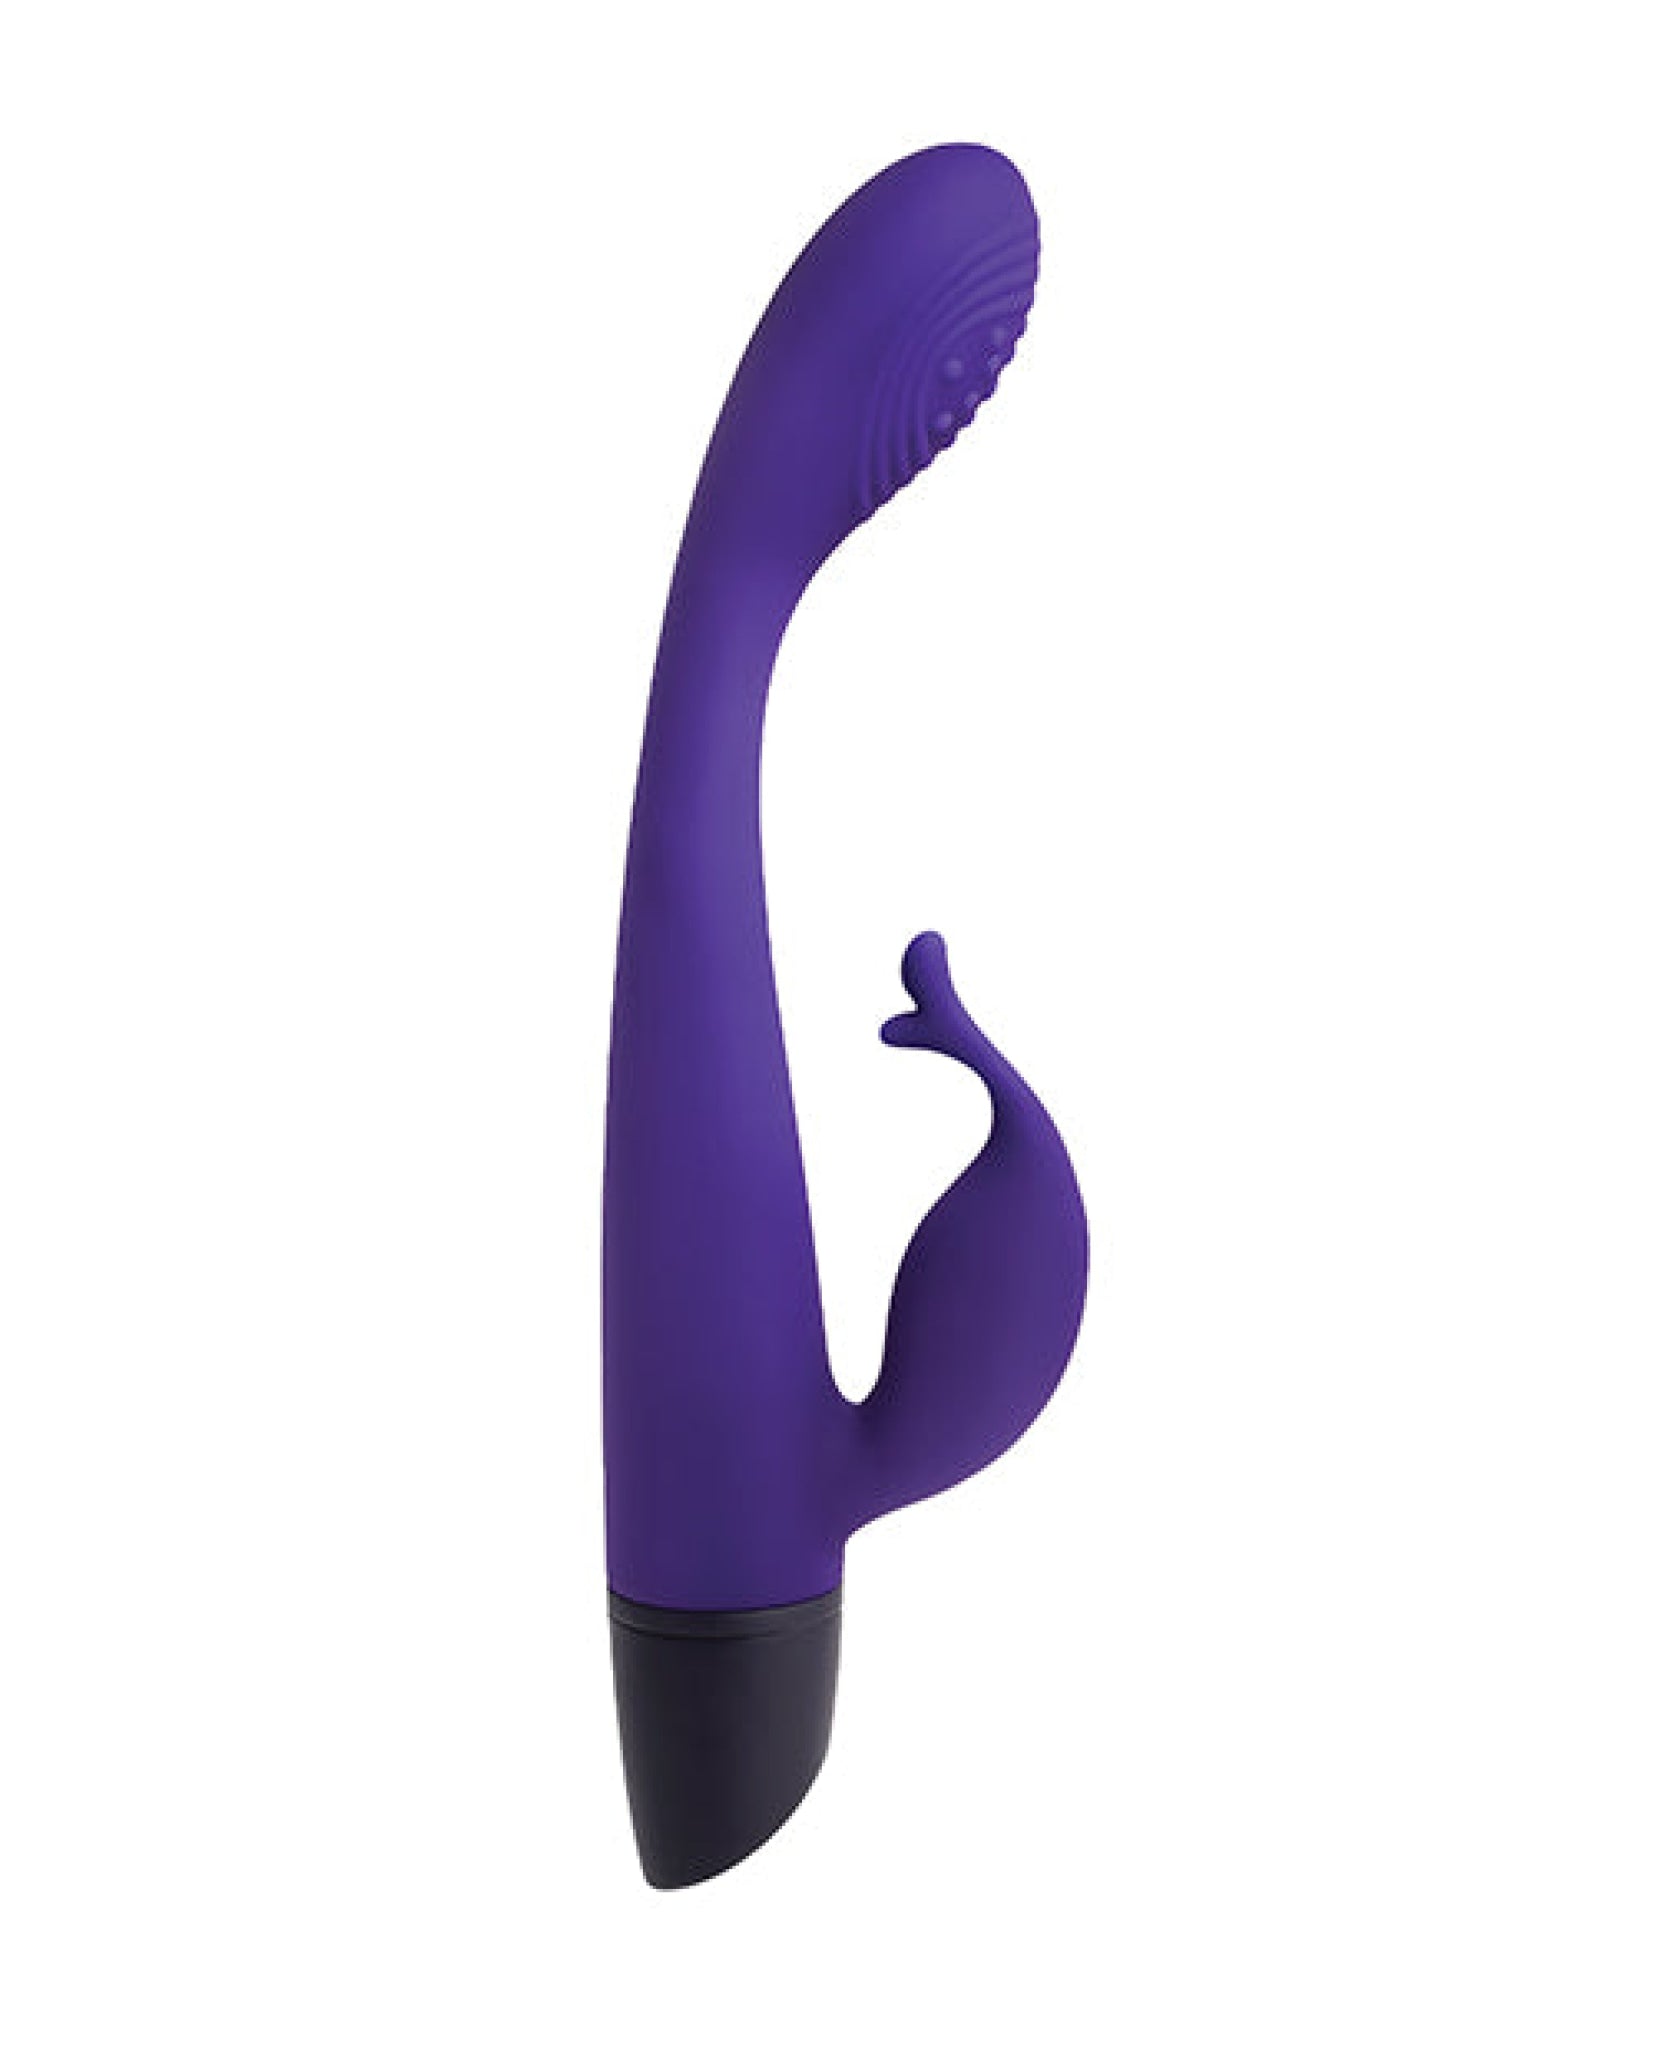 Selopa Plum Passion - Purple Selopa